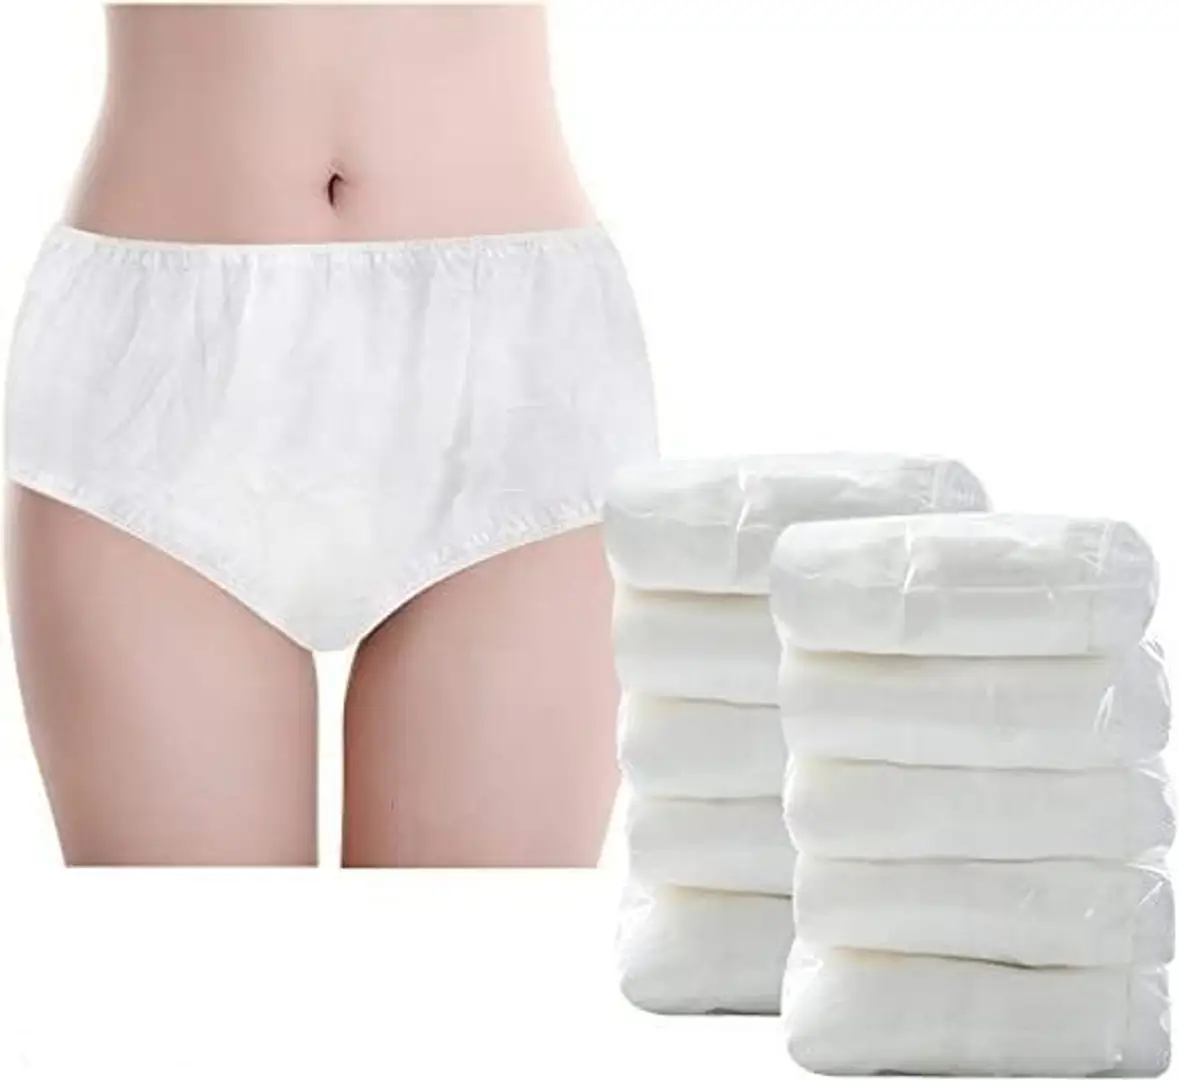 Nonwoven Medical Exam Underwear Long Pants Disposable Hospital